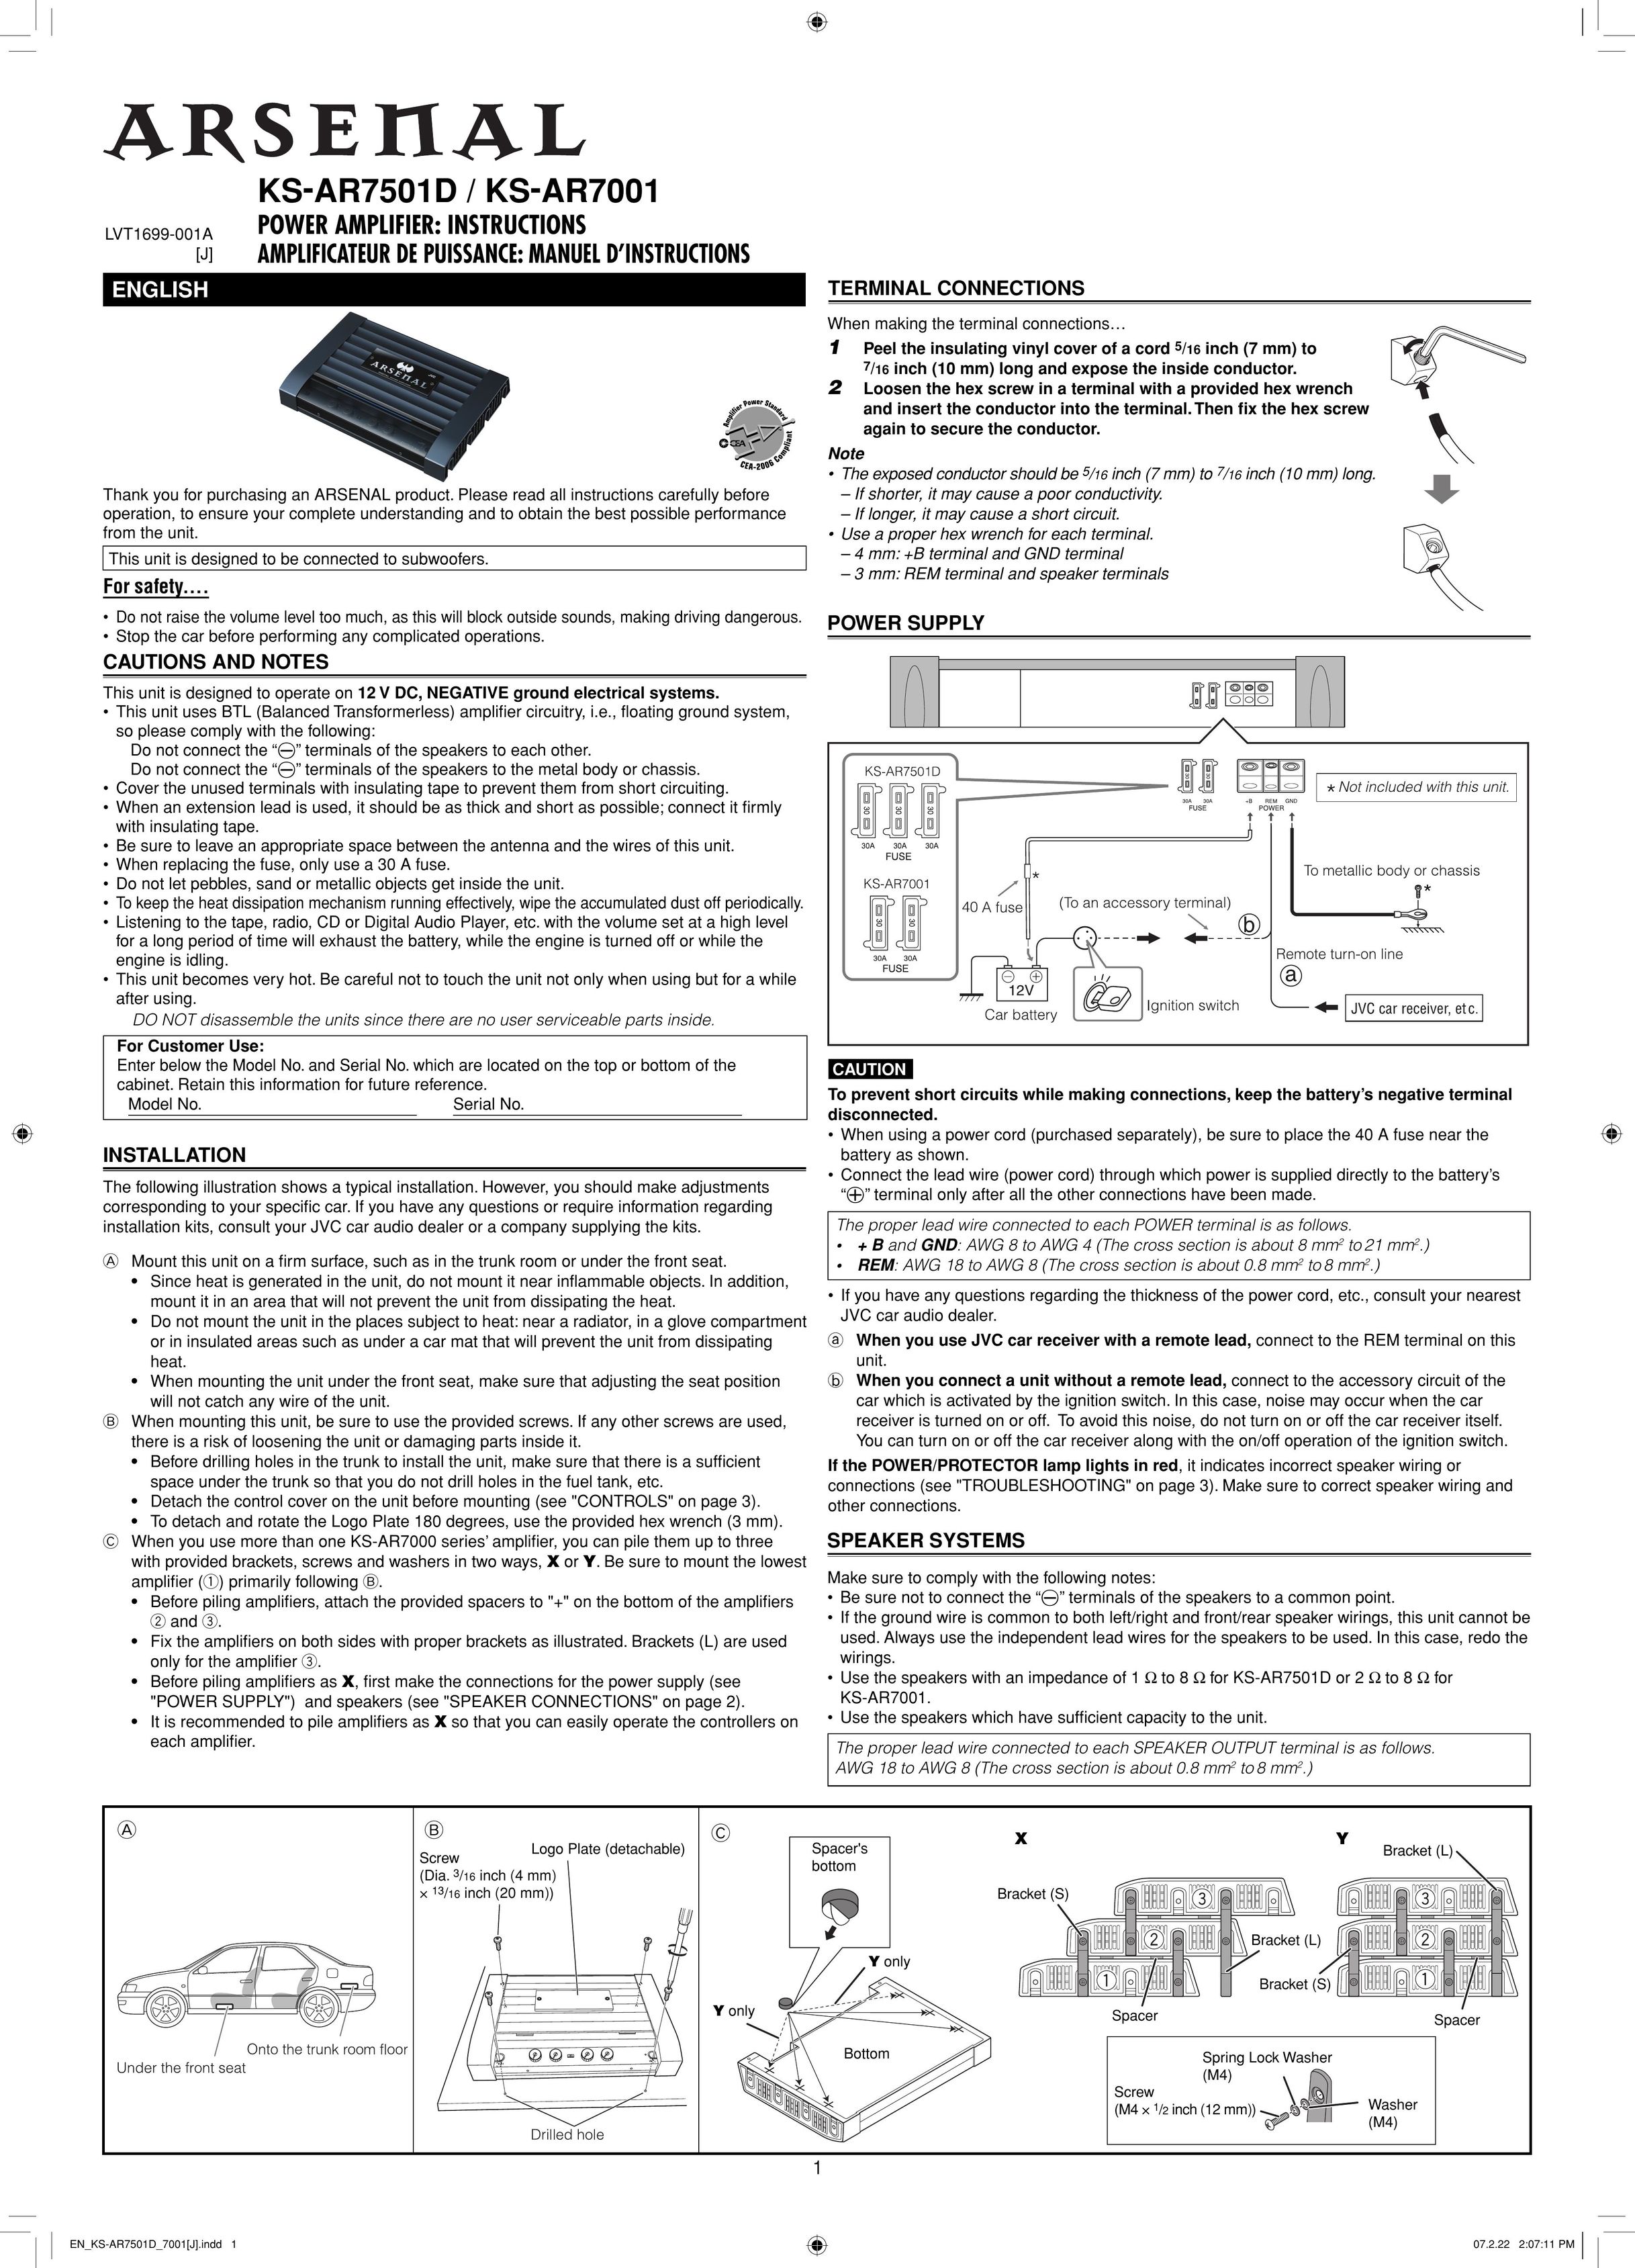 Arsenal Gaming KS-AR7501D Stereo Amplifier User Manual